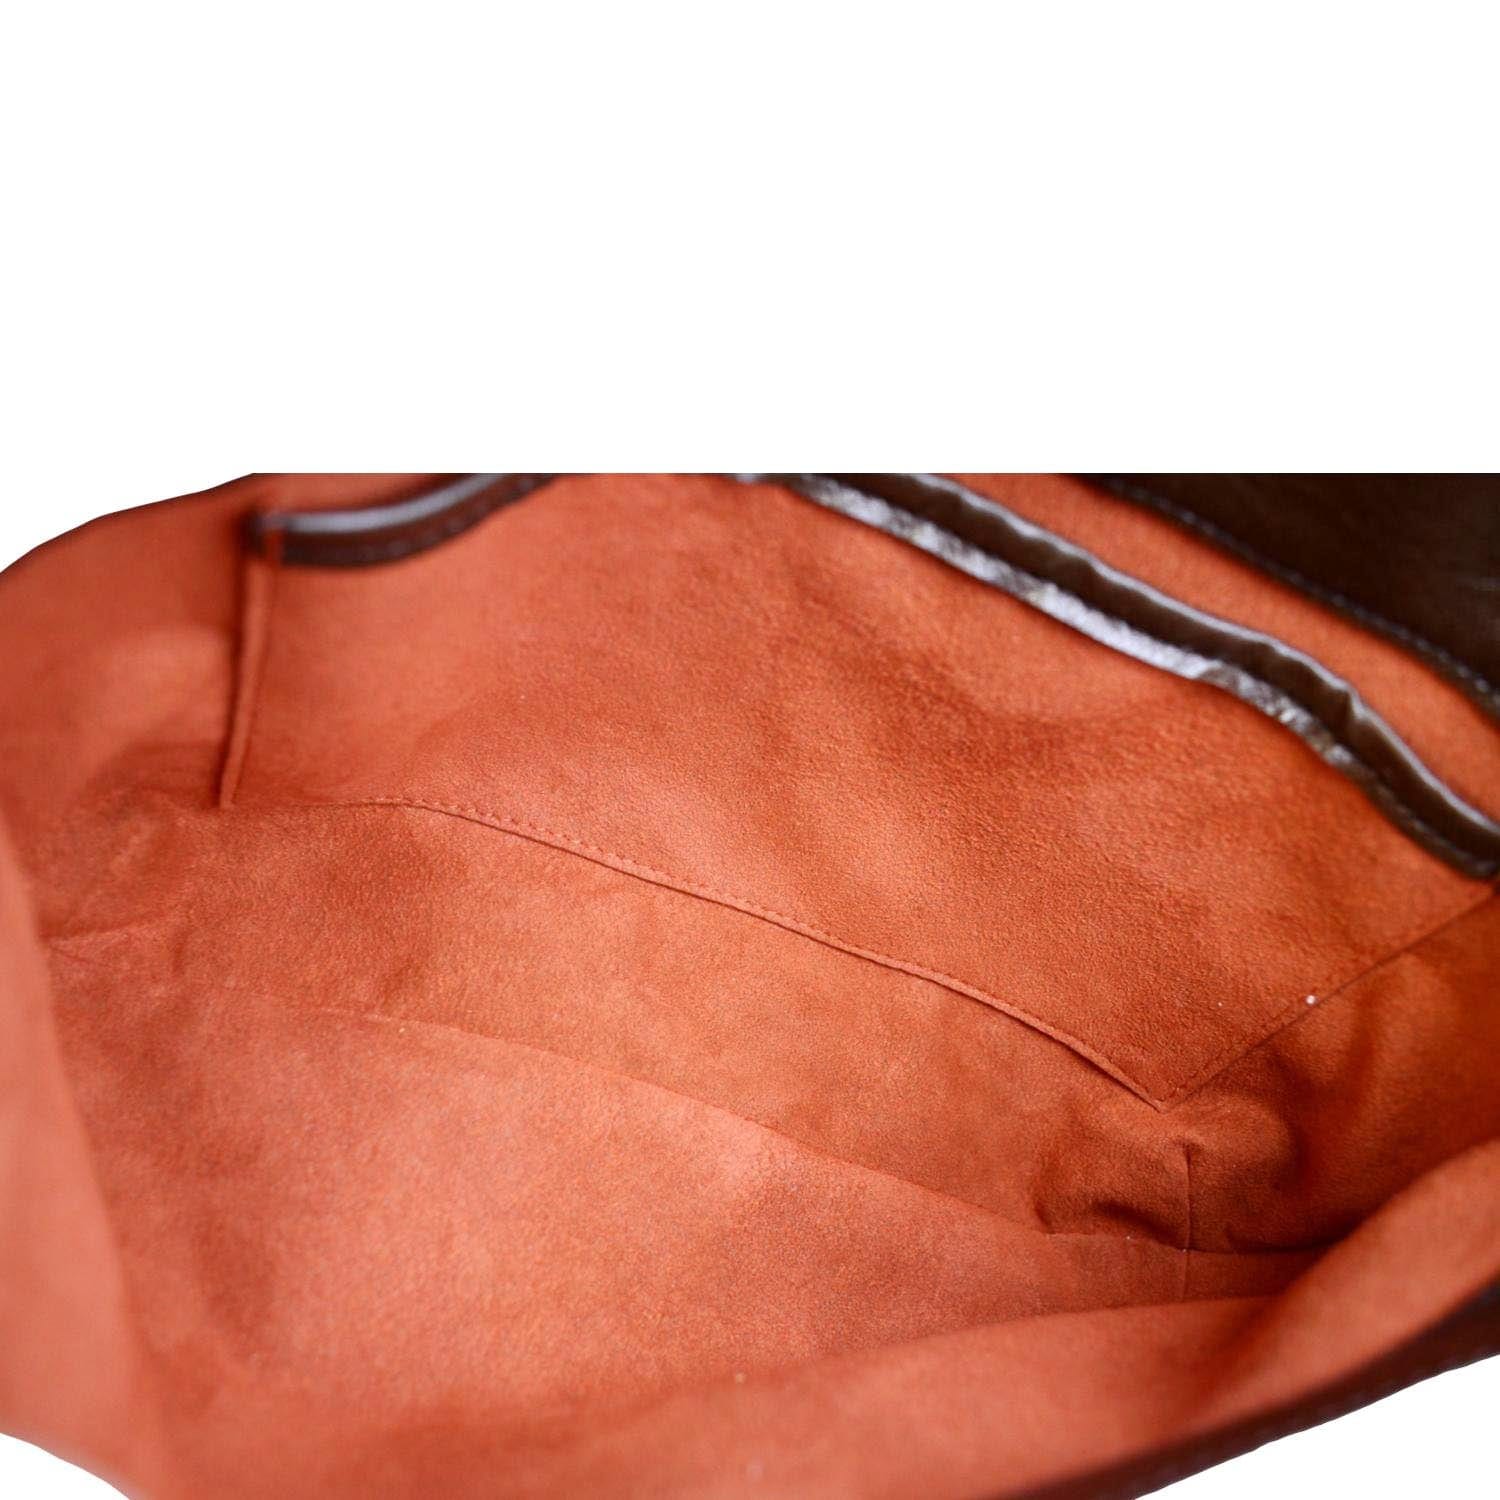 ❤️ UPDATED REVIEW - Louis Vuitton Tango (short strap) 